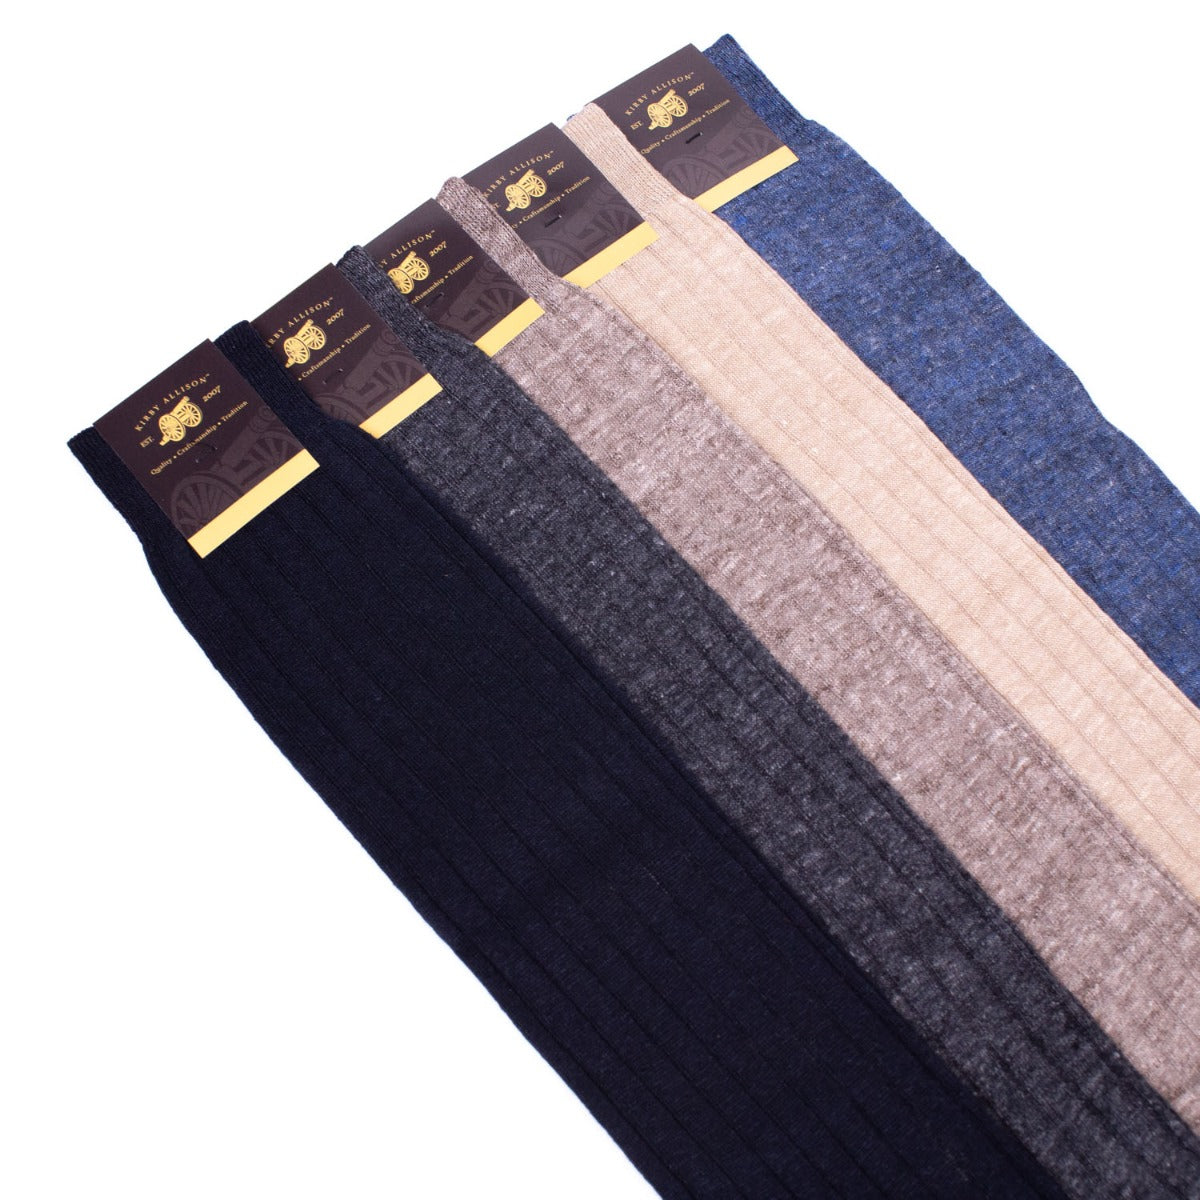 Four pairs of KirbyAllison.com's Sovereign Grade 100% Linen Dress Socks OTC in different colors.